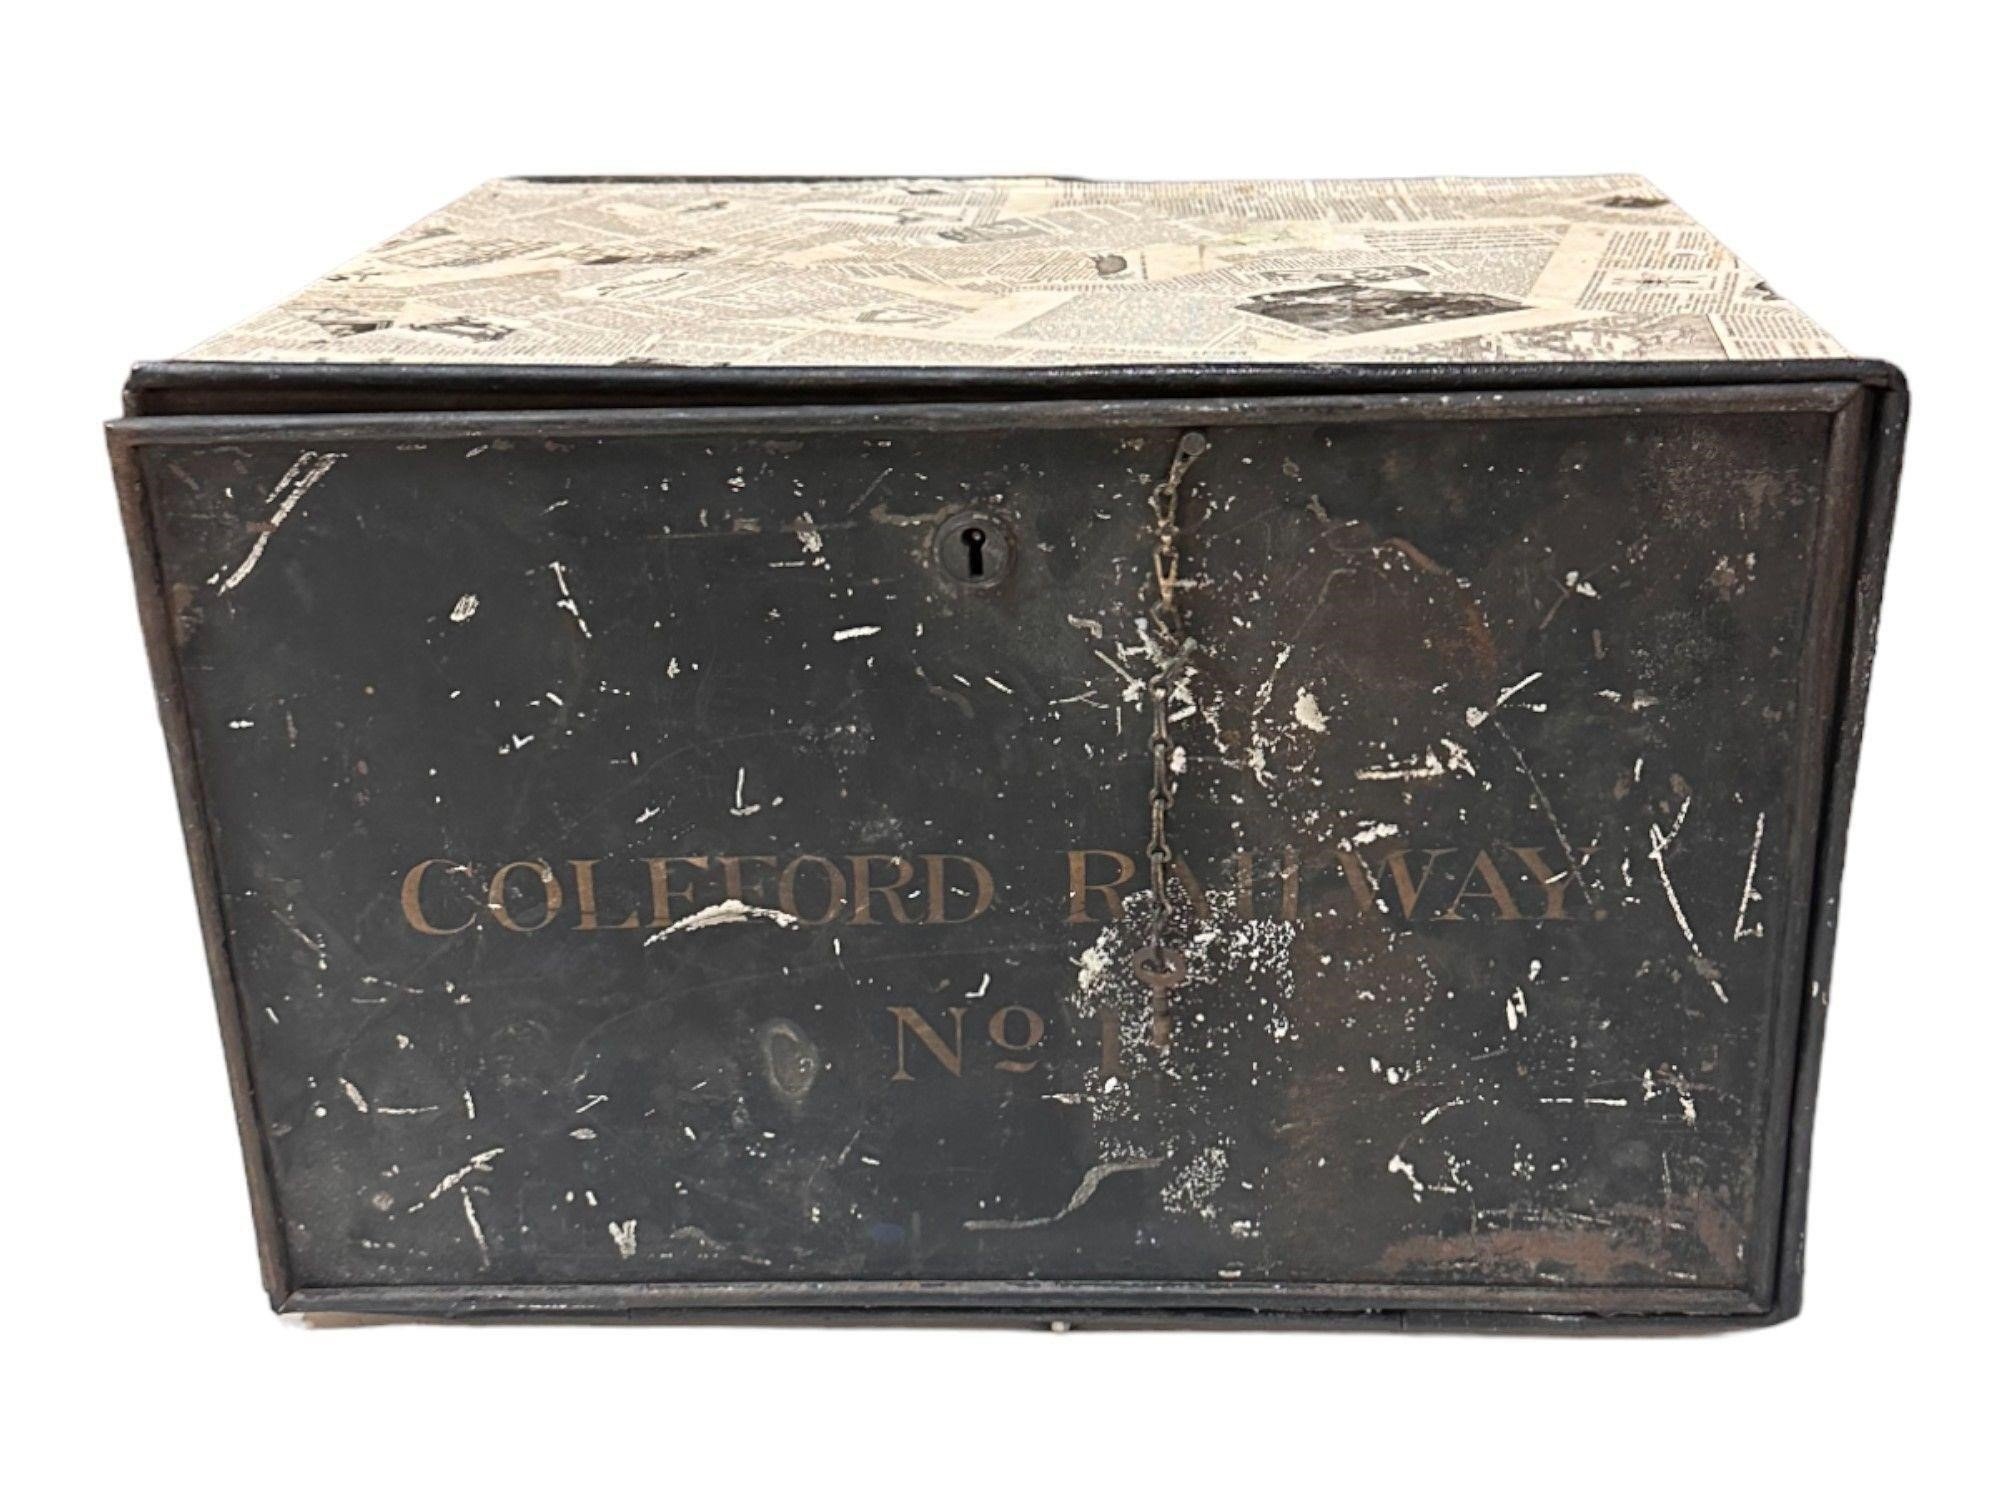 English Colford Railway Deed Metal Box, Decoupaged